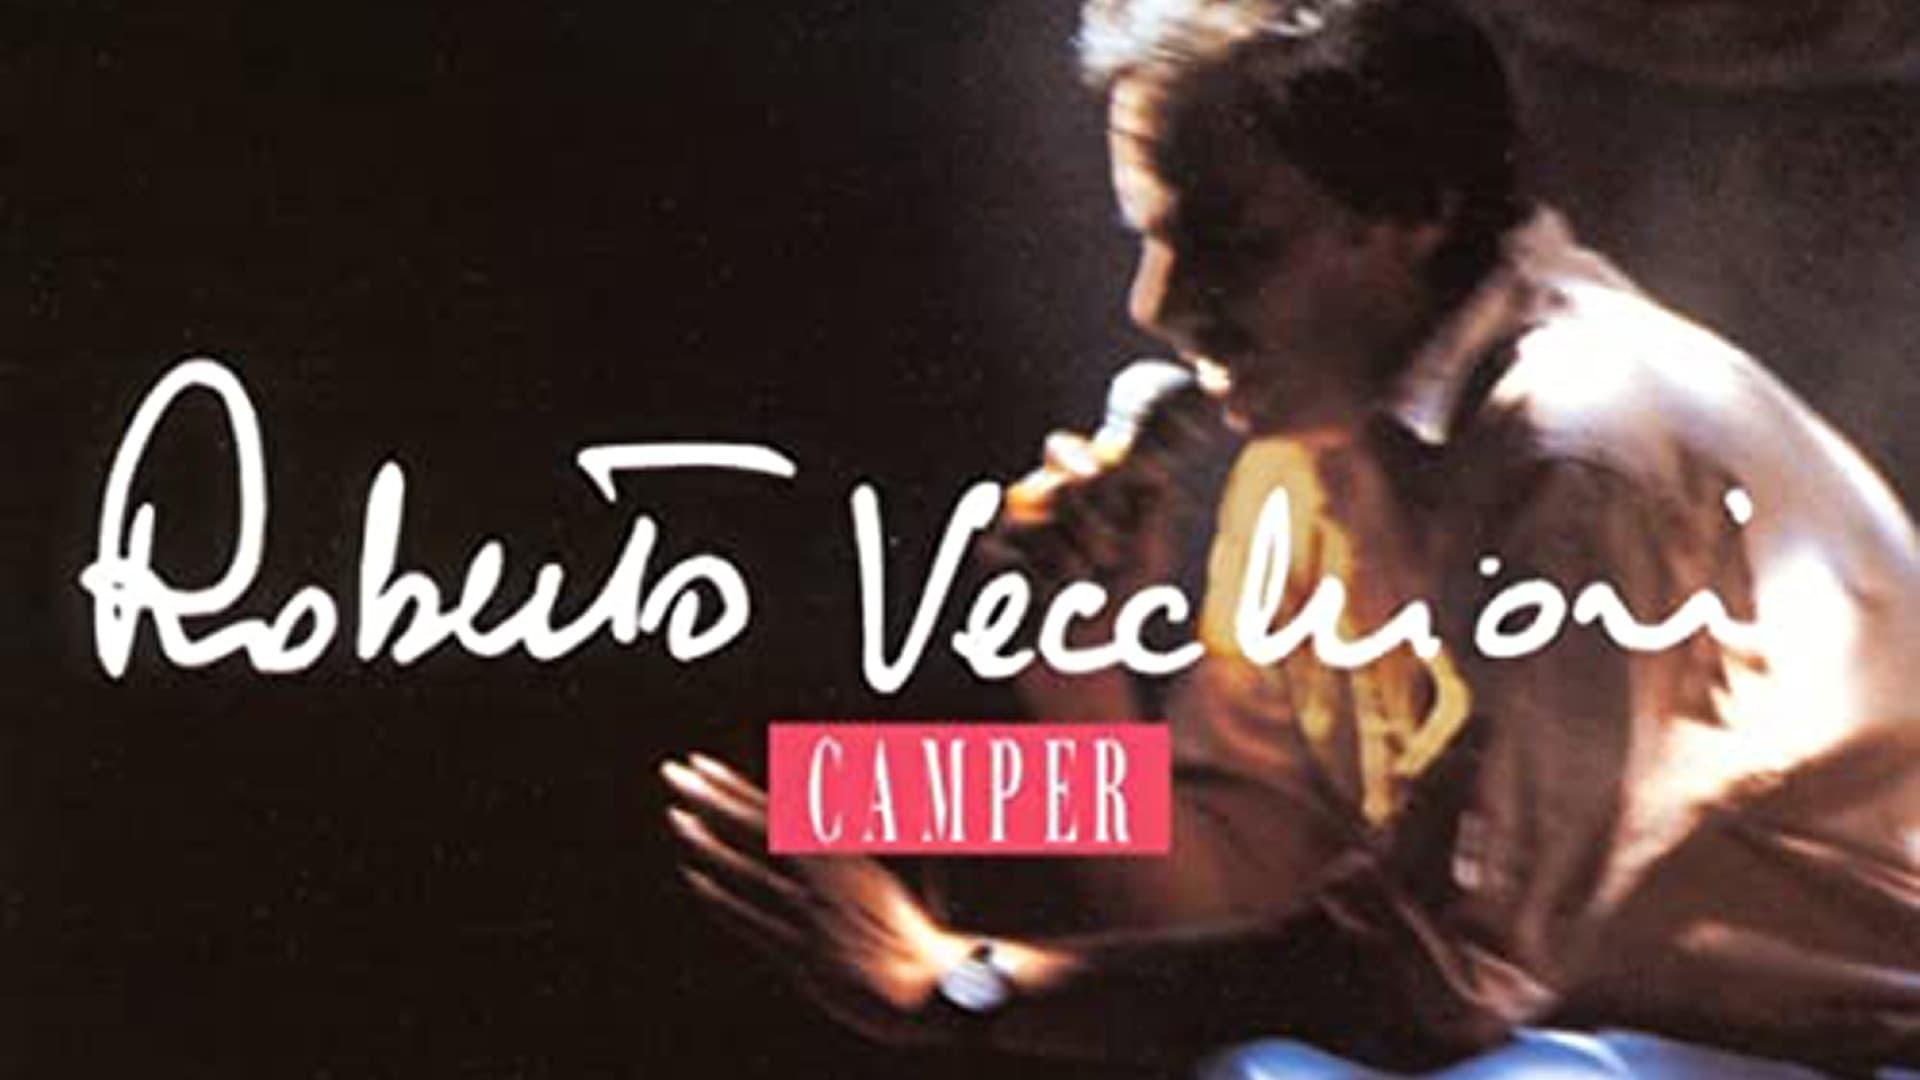 Roberto Vecchioni - Camper backdrop